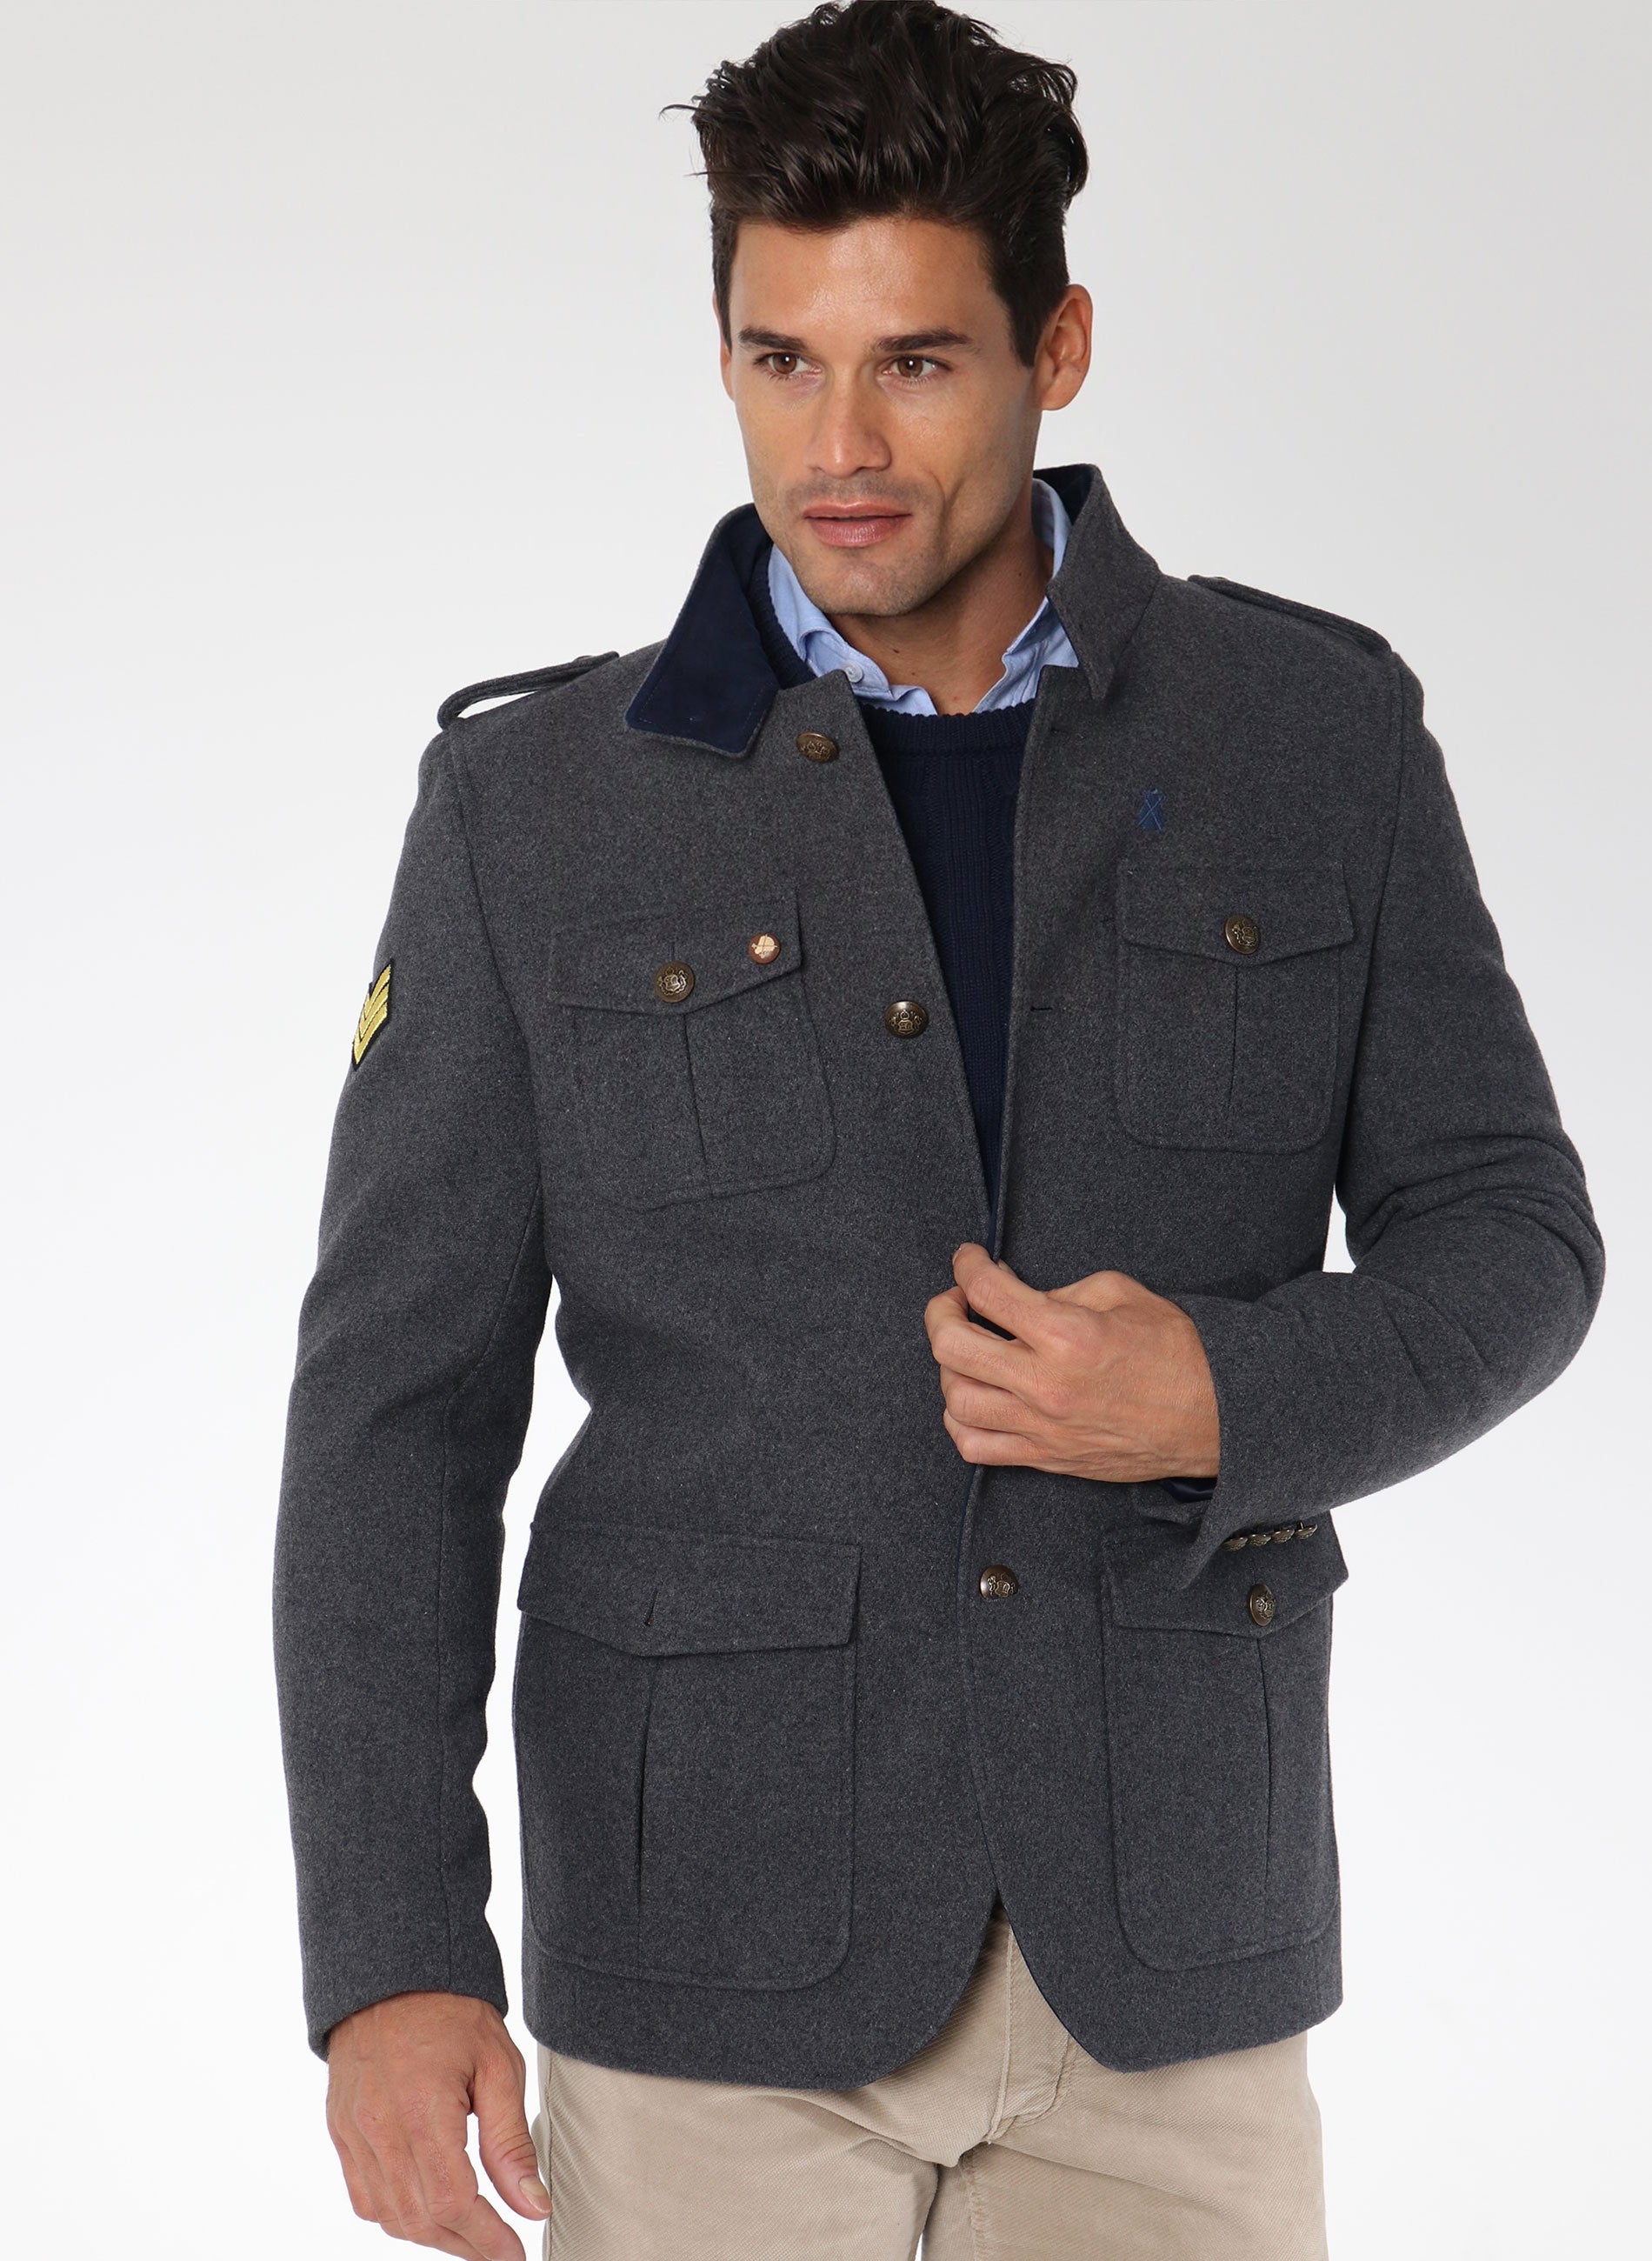 Austrian Jacket Men Gray